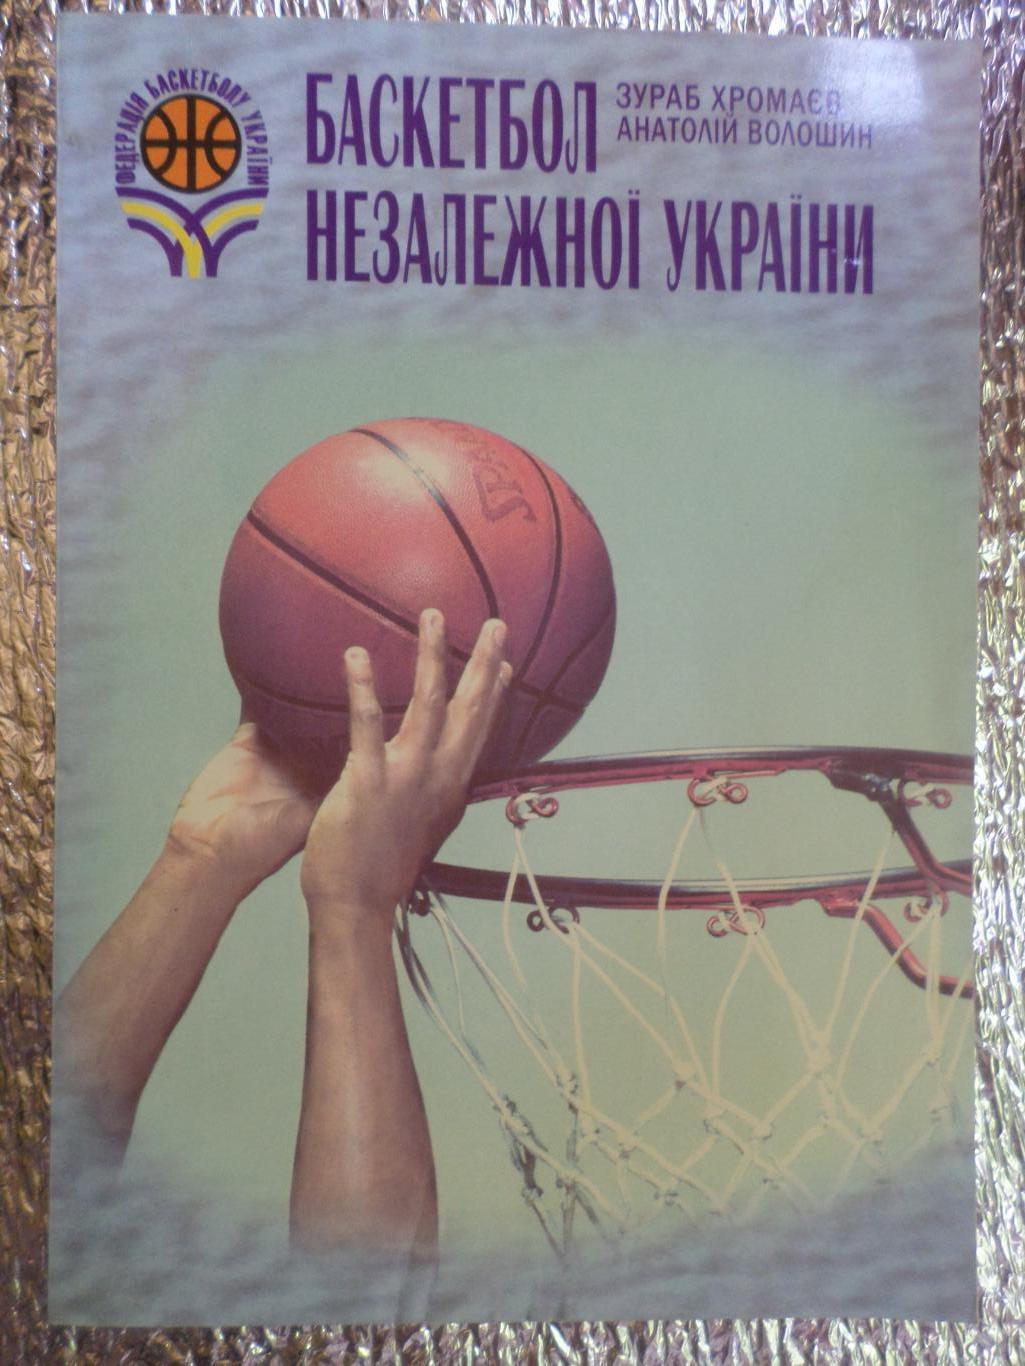 Хромаев - Баскетбол незалежної України 2006 г